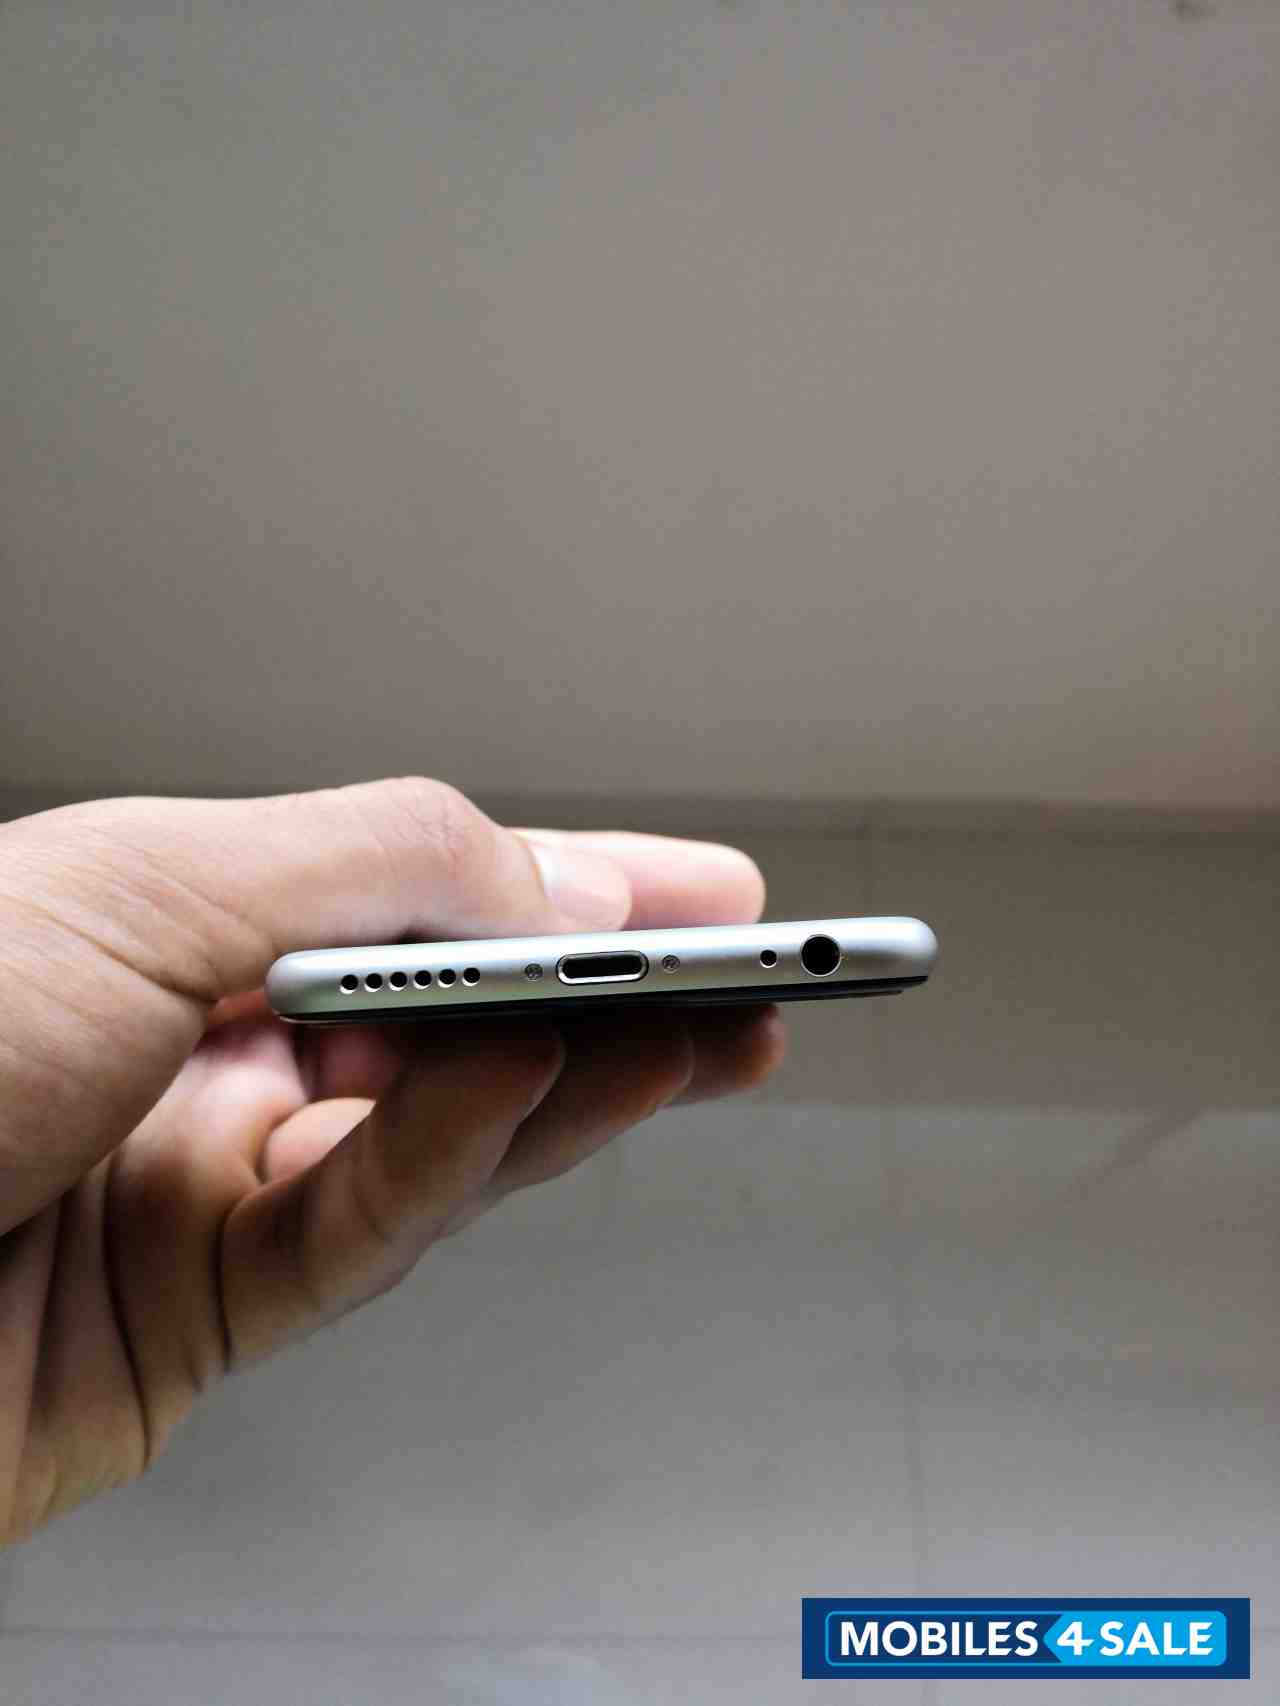 Space Grey Apple  IPhone 6